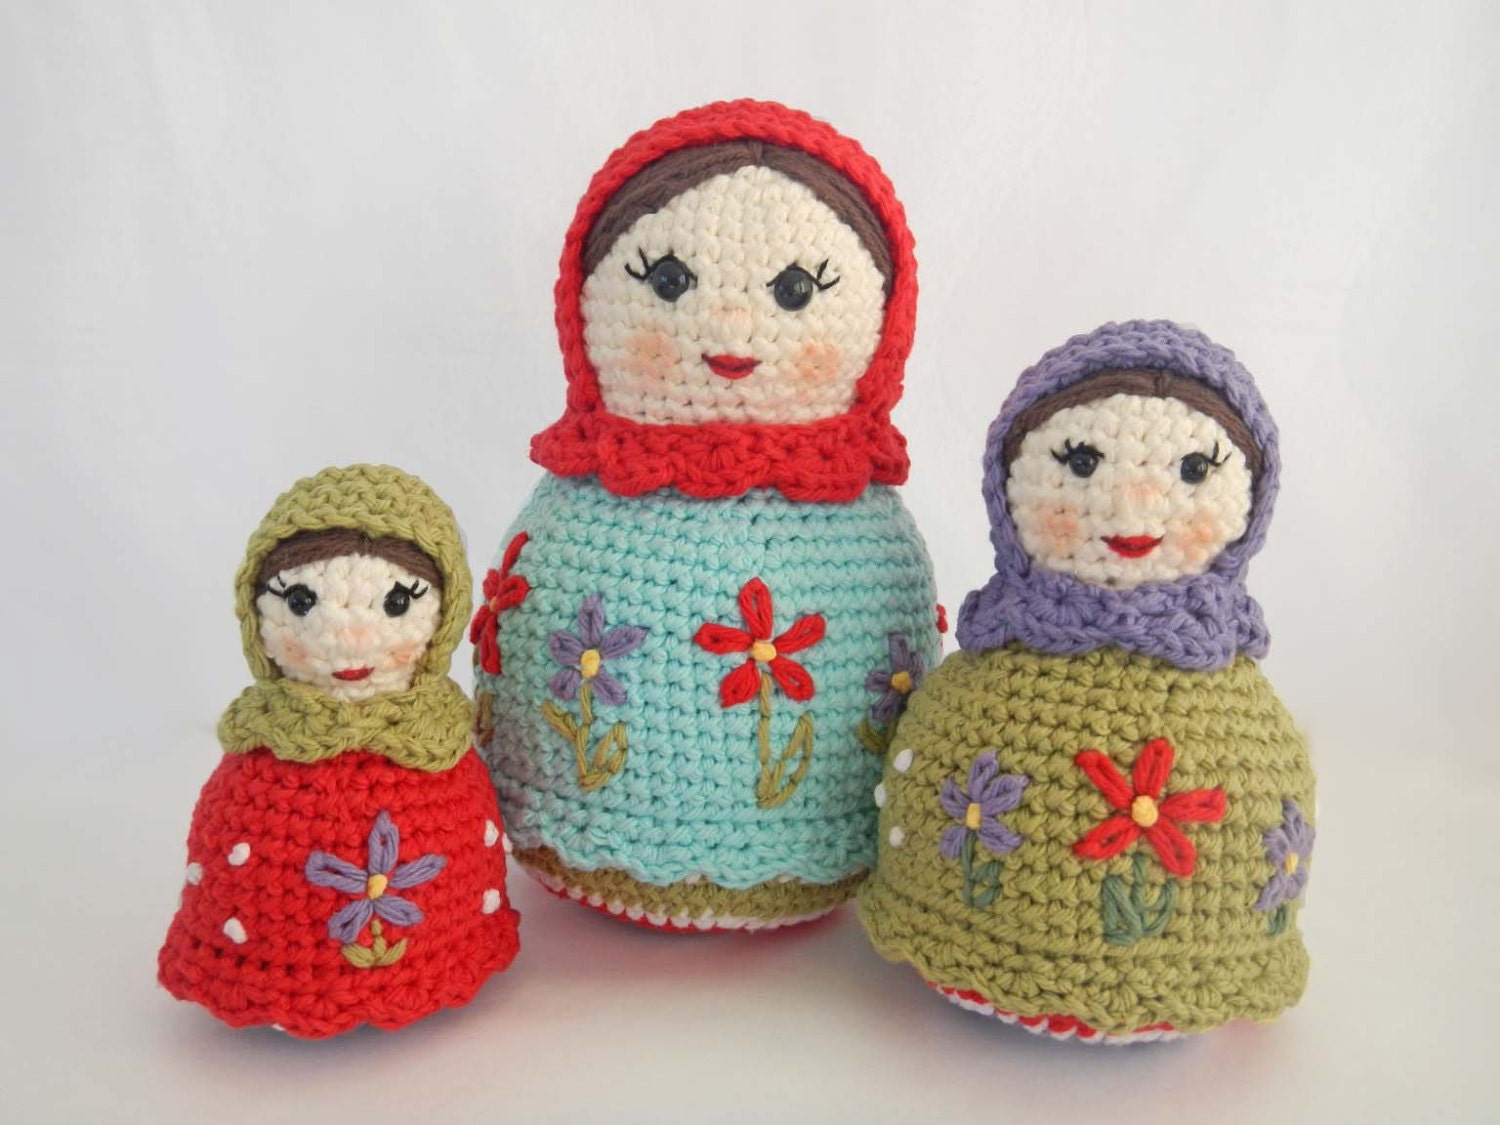 How to Crochet Dolls Pattern for Amigurumi Matryoshka Dolls